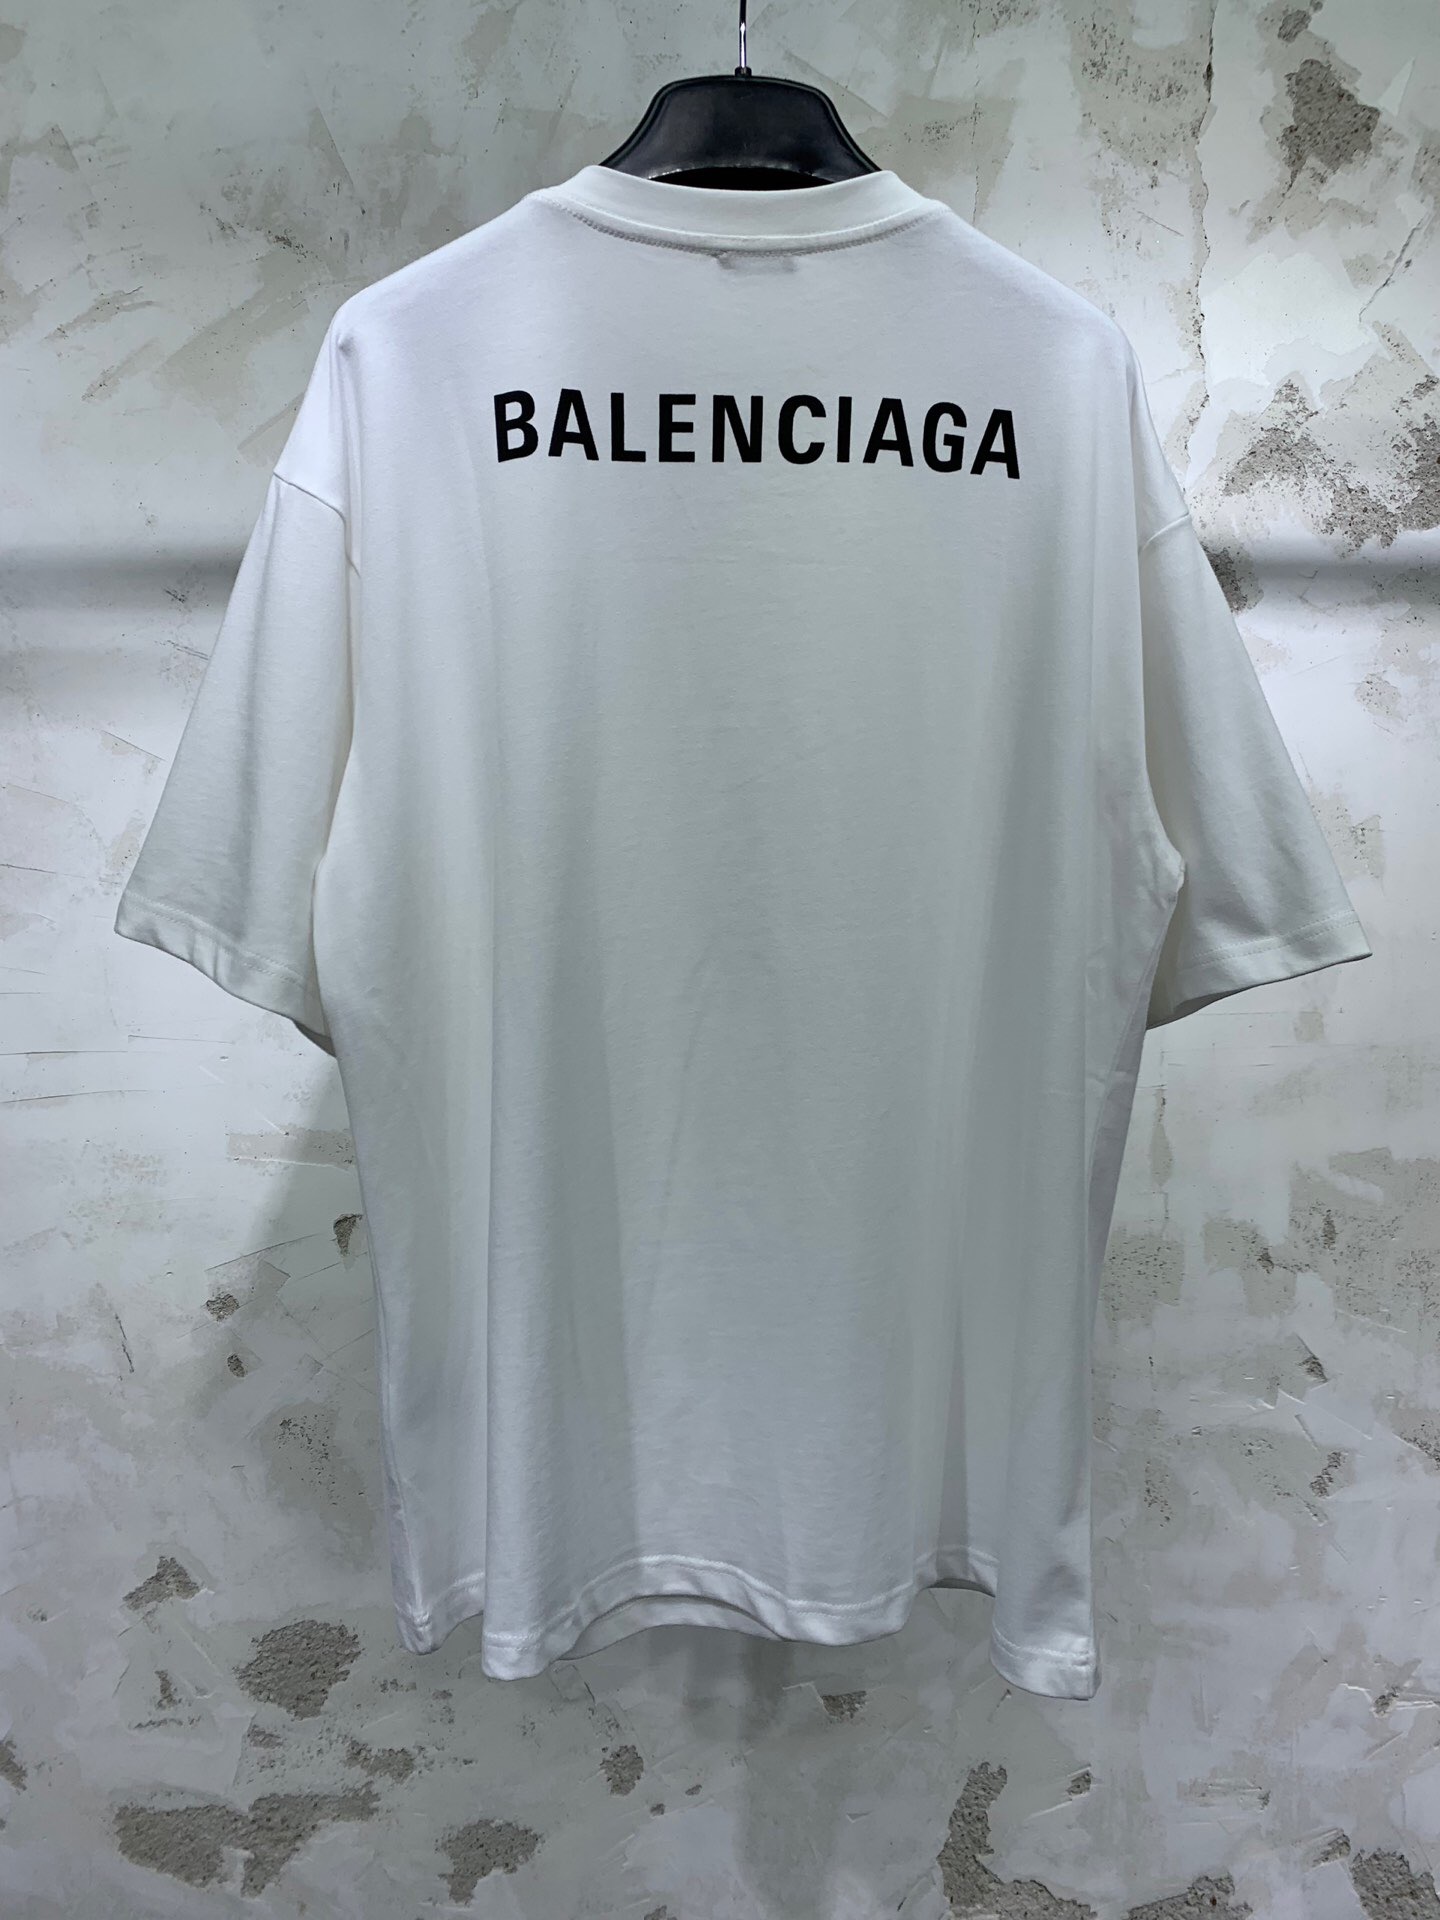 Balenciaga Back Logo Shirt Sale, 56% OFF | www.ingeniovirtual.com